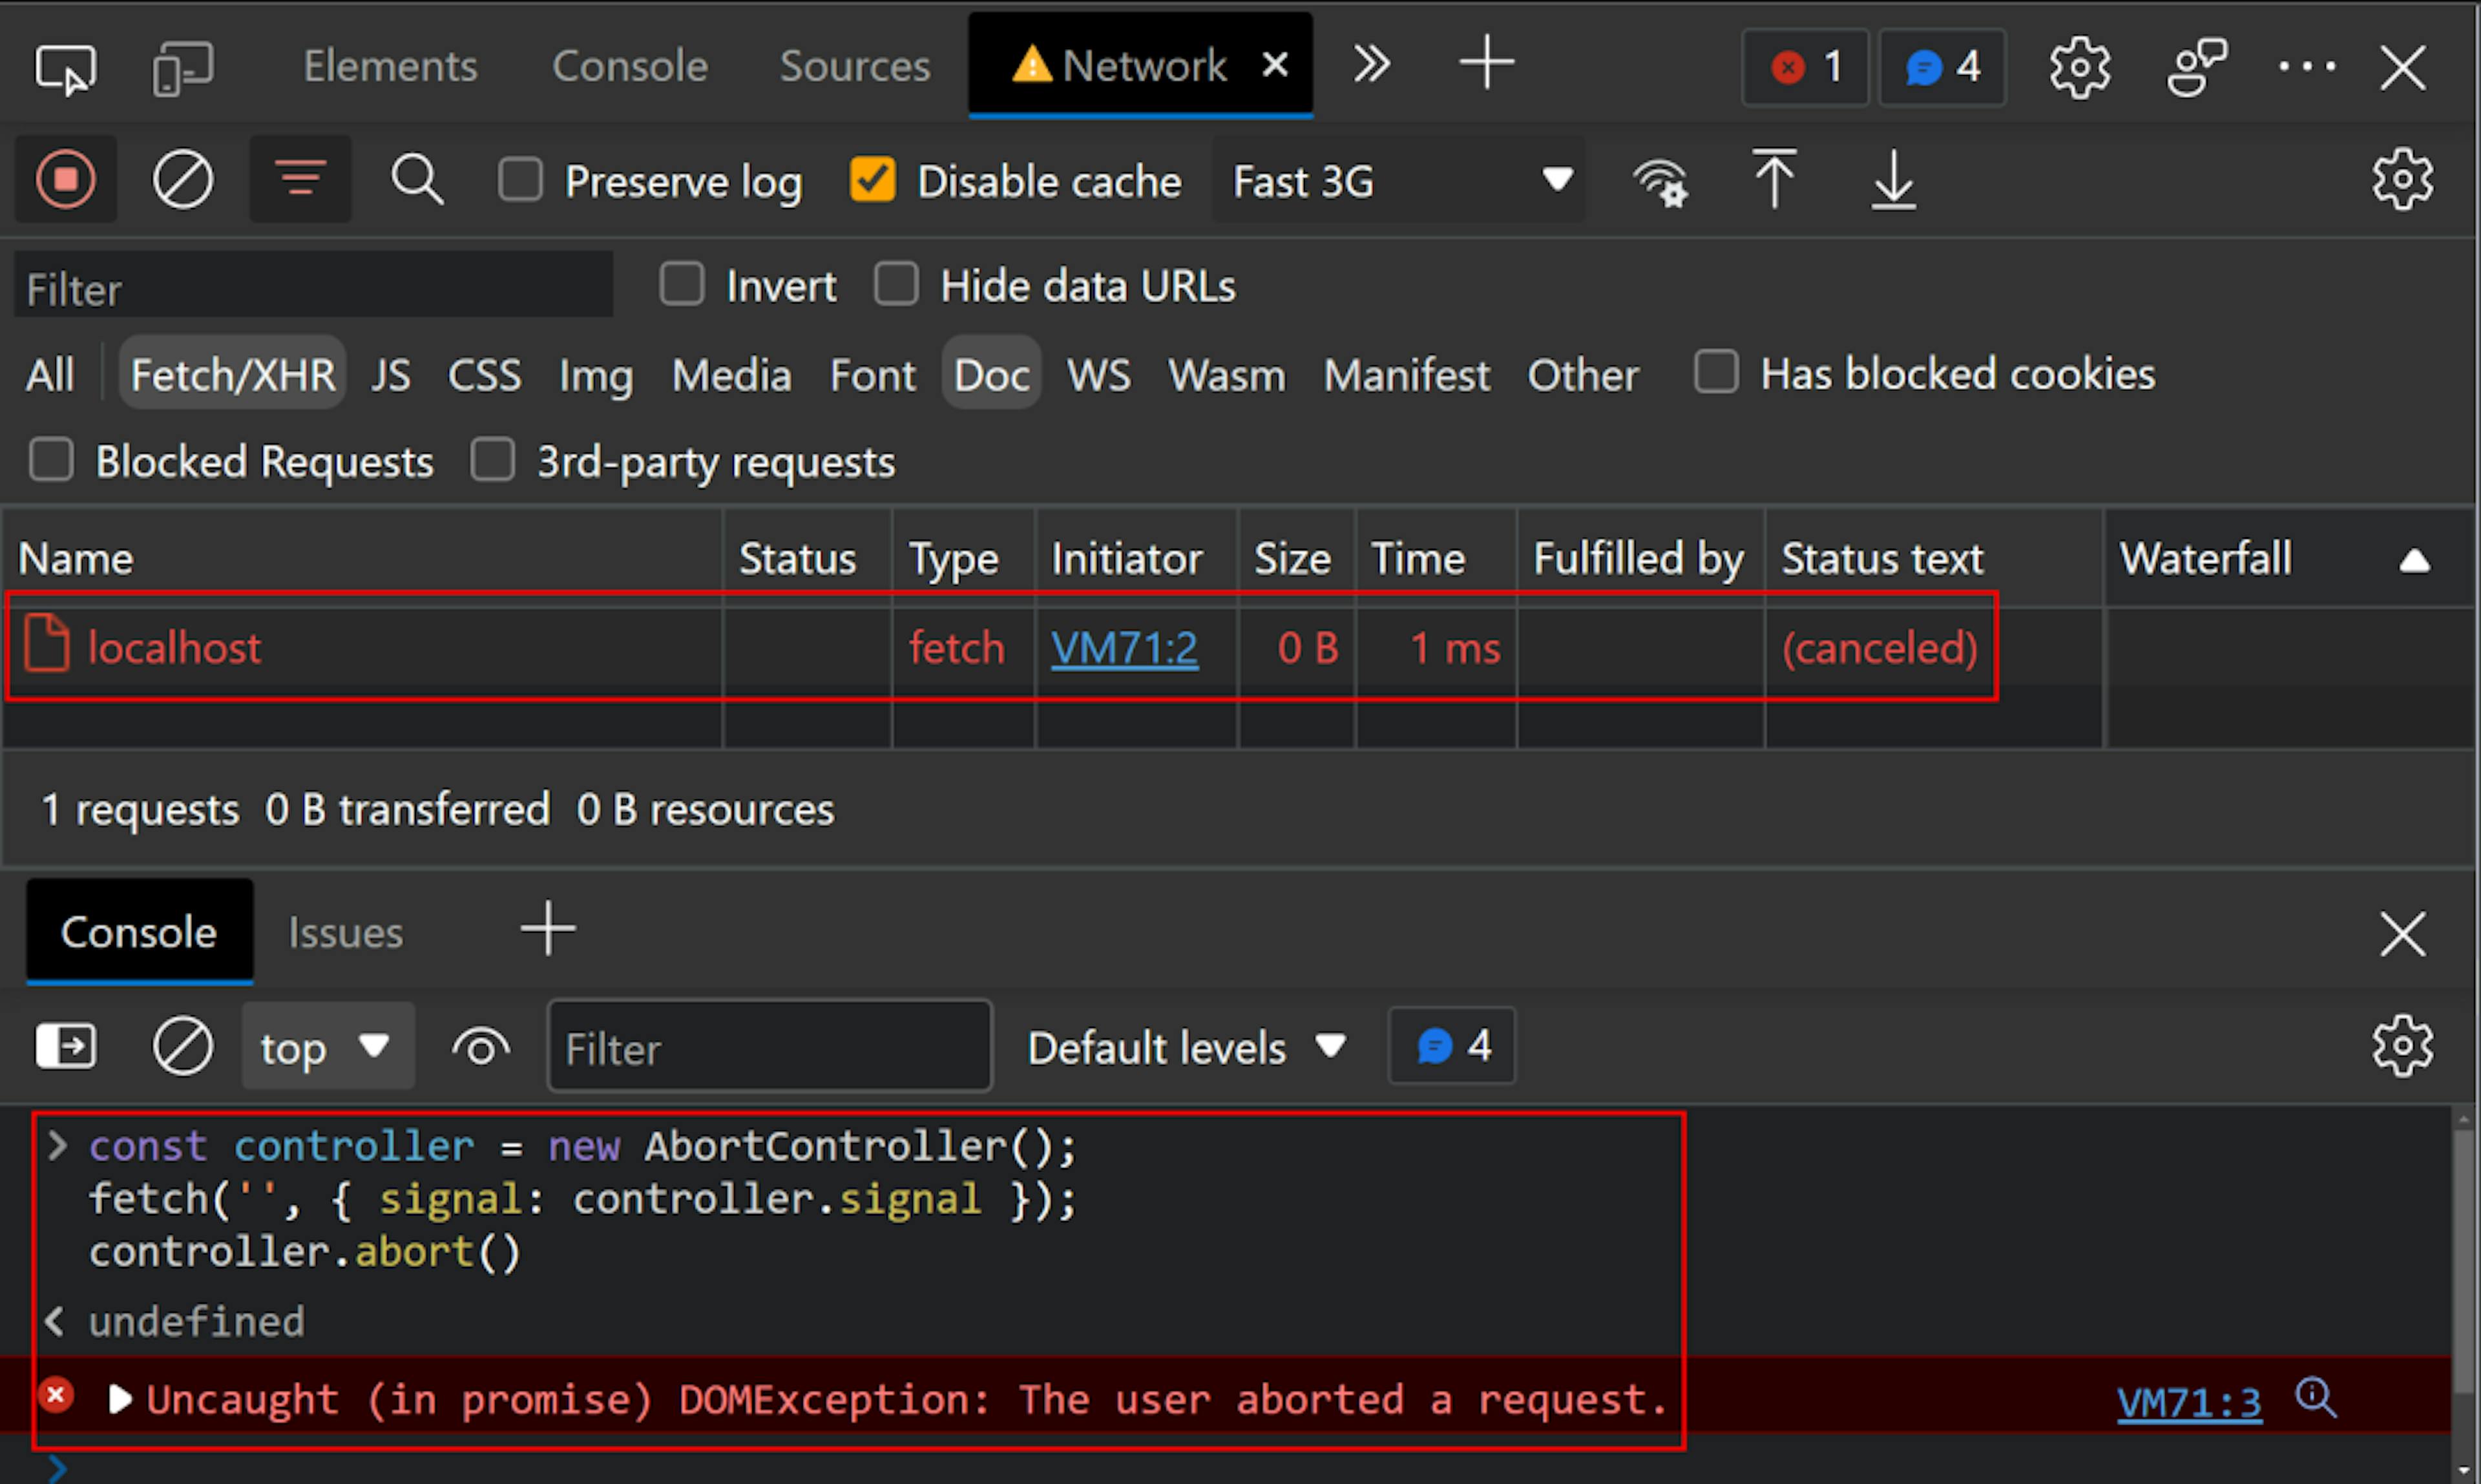 Chrome 开发工具在打开 JavaScript 控制台的情况下向网络开放。在控制台中是代码“const controller = new AbortController();fetch('', { signal: controller.signal });controller.abort()”，后面是异常“Uncaught (in promise) DOMException: The用户中止了一个请求。”在网络中，有一个到“本地主机”的请求，状态文本为“（已取消）”